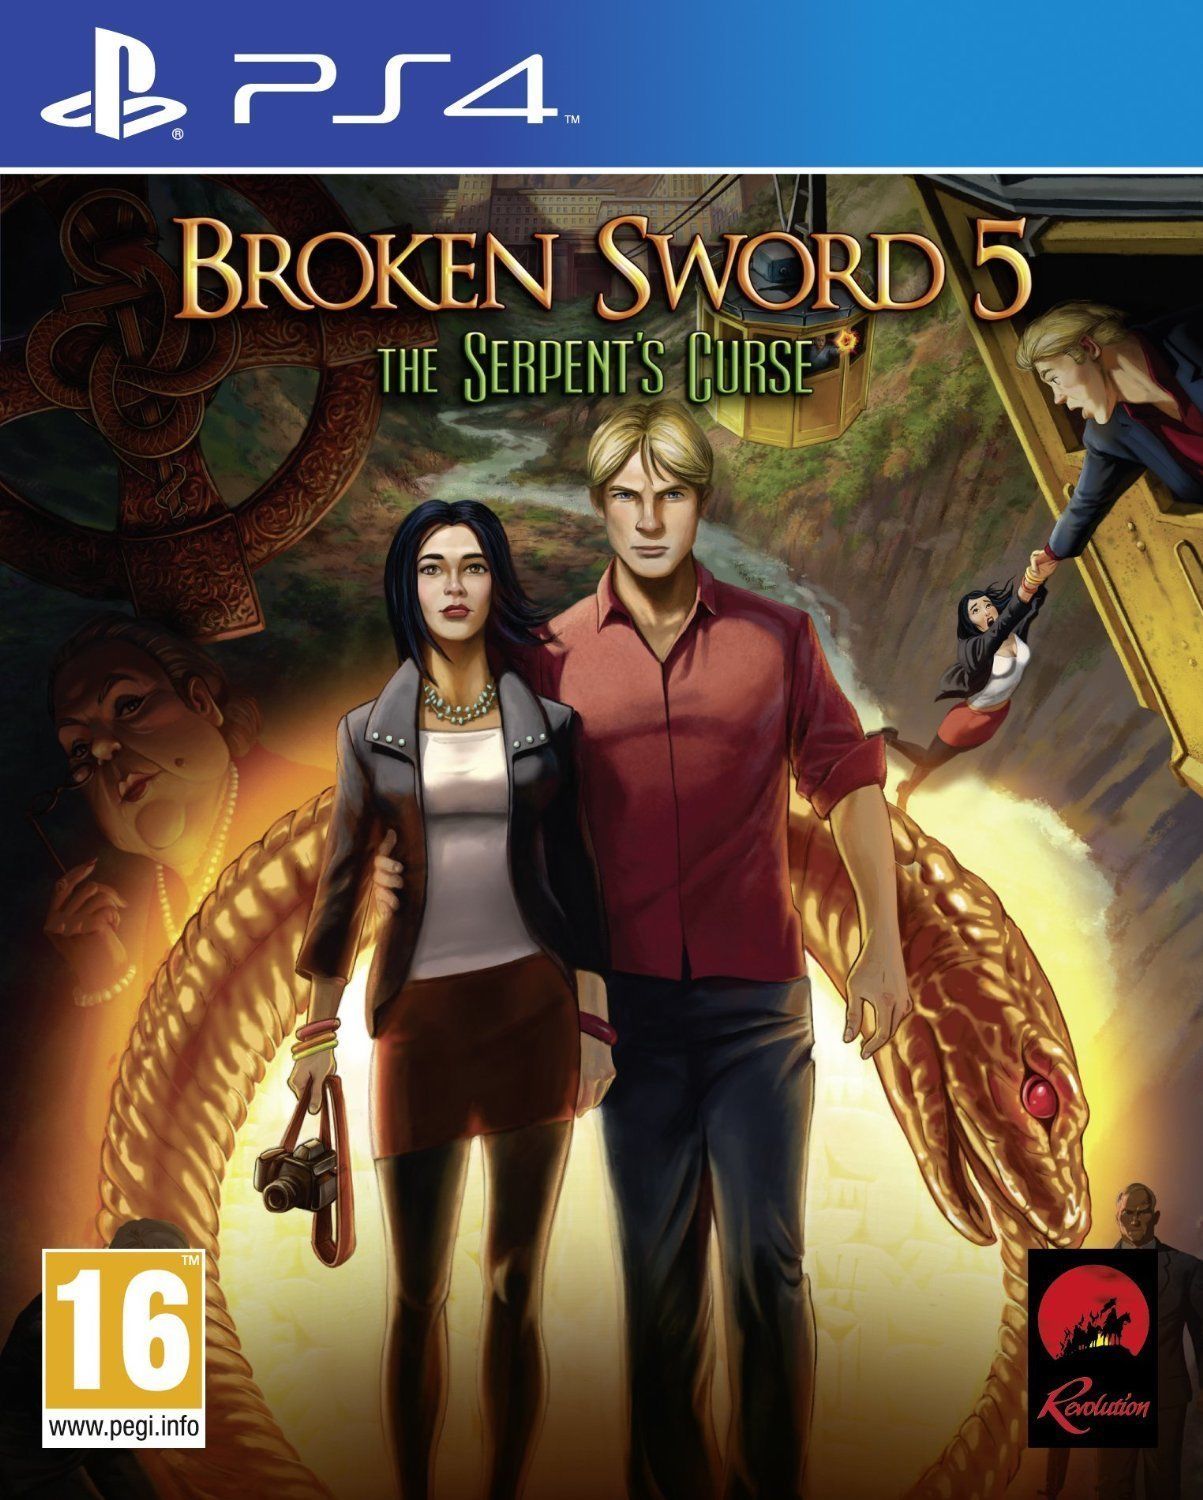 Broken Sword 5 - The Serpent's Curse For PS4 - saynama